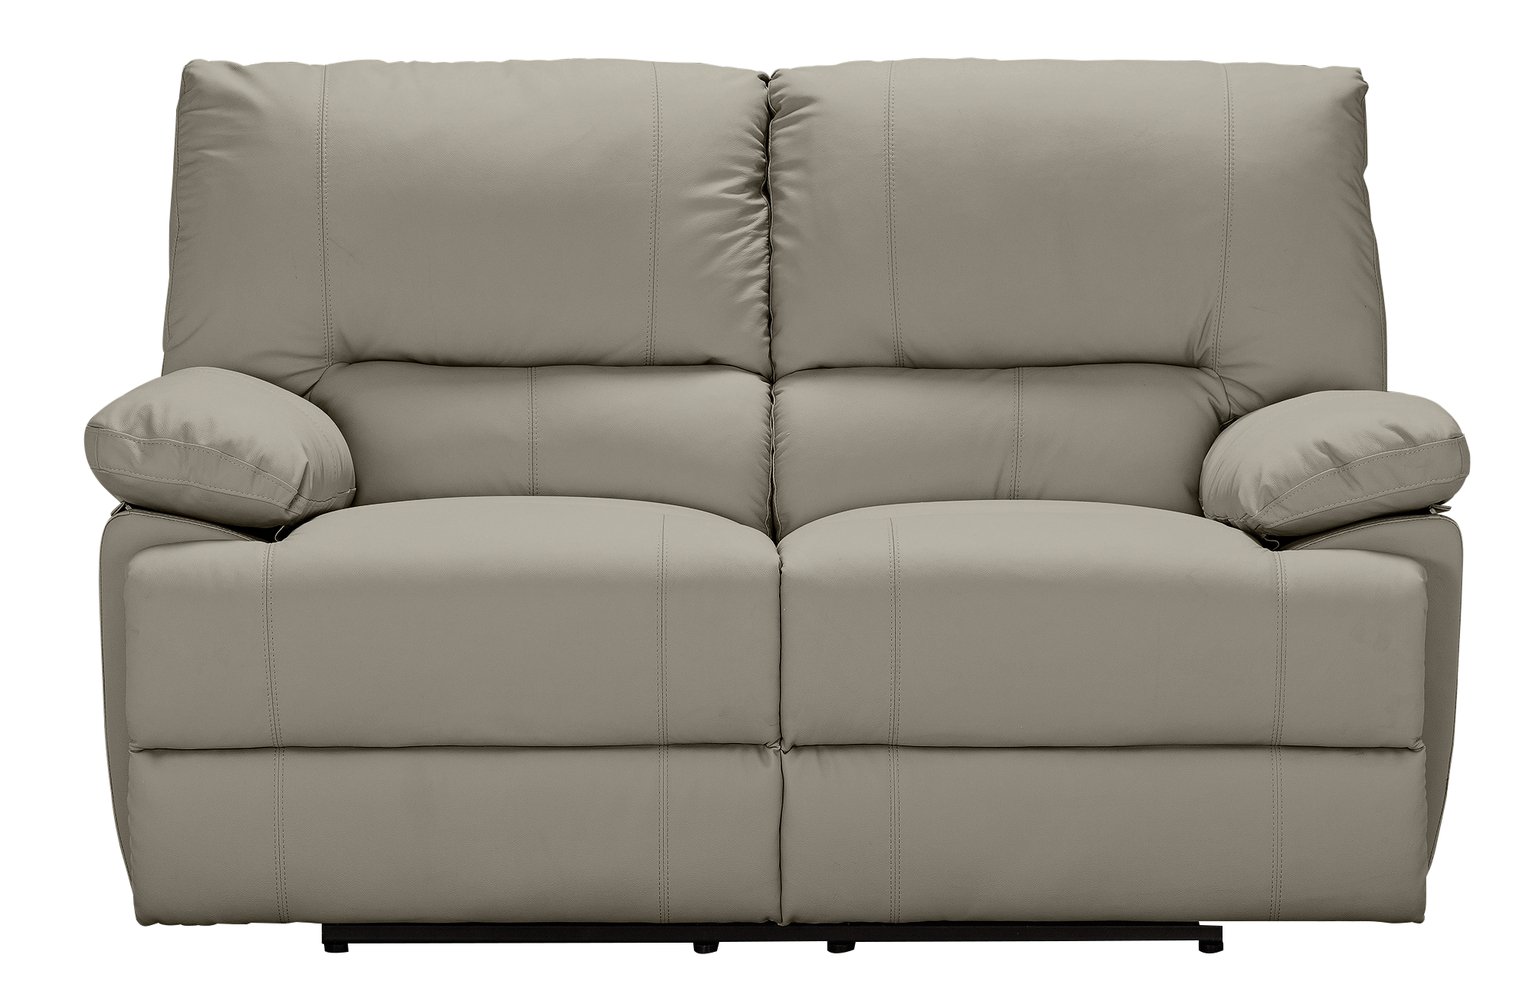 argos 2 seater leather recliner sofa